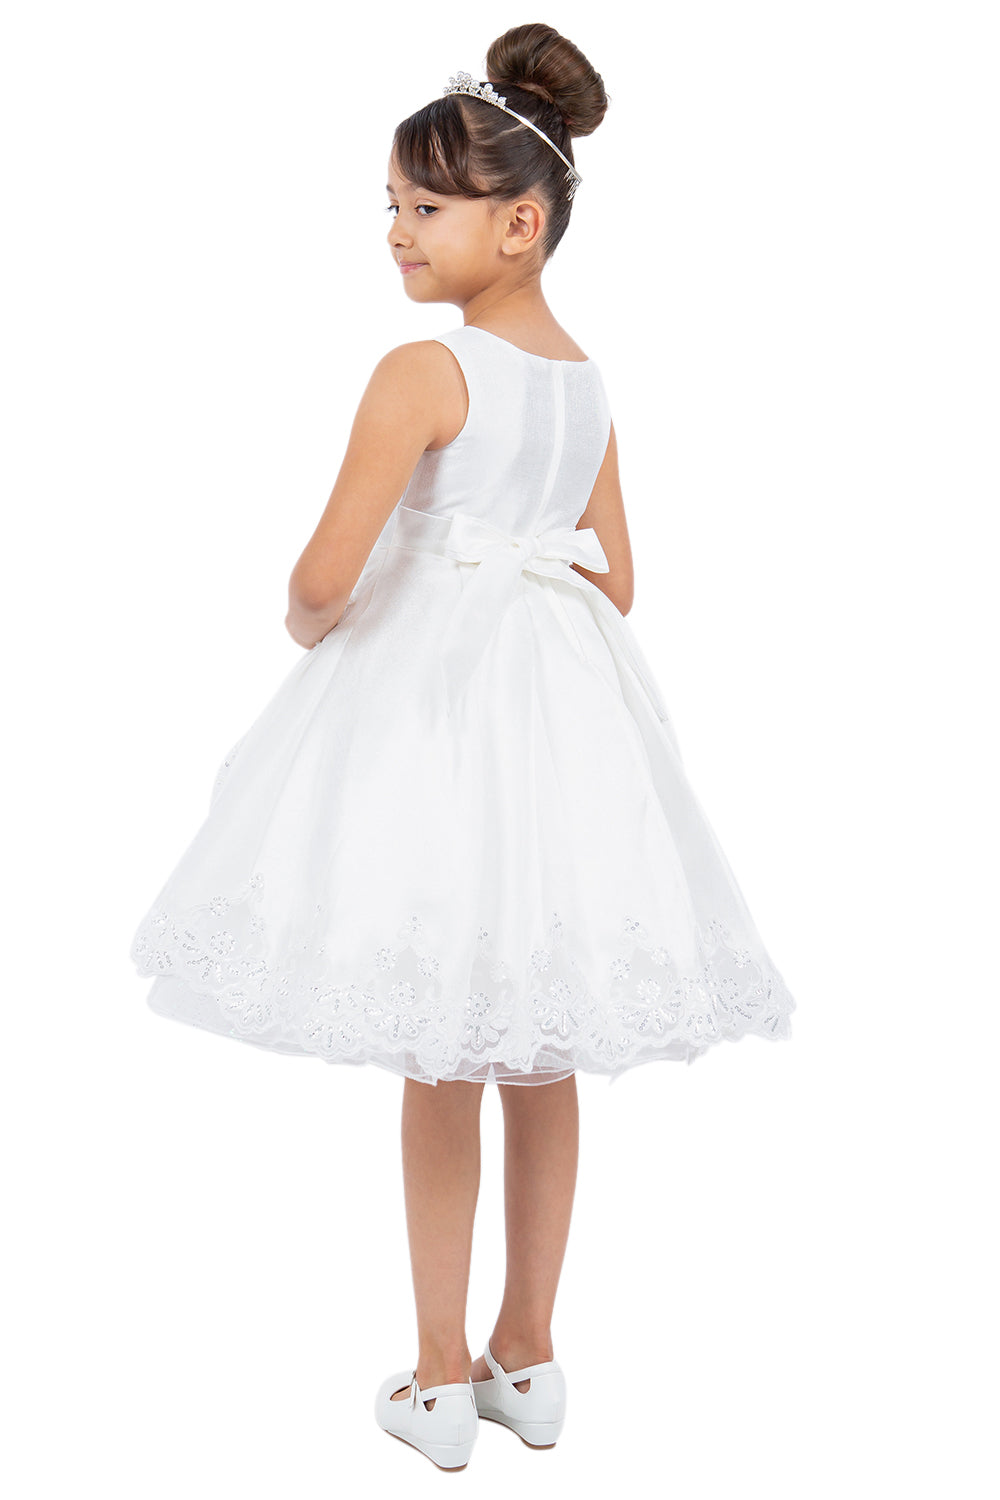 Girls Applique Short Satin Dress by Cinderella Couture 5127